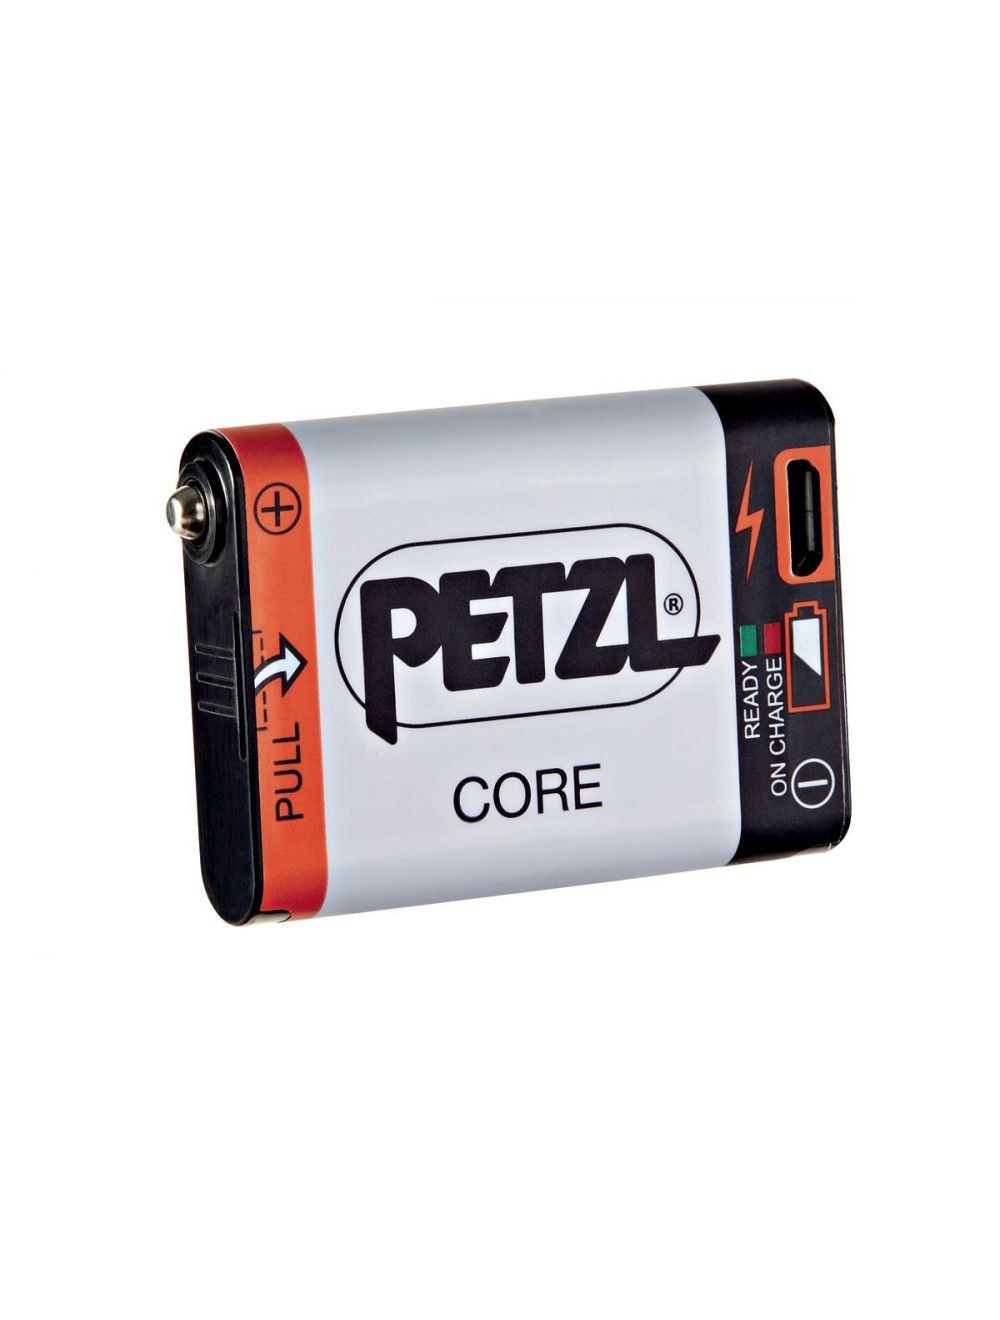 Teleurgesteld Artistiek Bowling Petzl Core Oplaadbare Batterij kopen? Zaklampen.nl